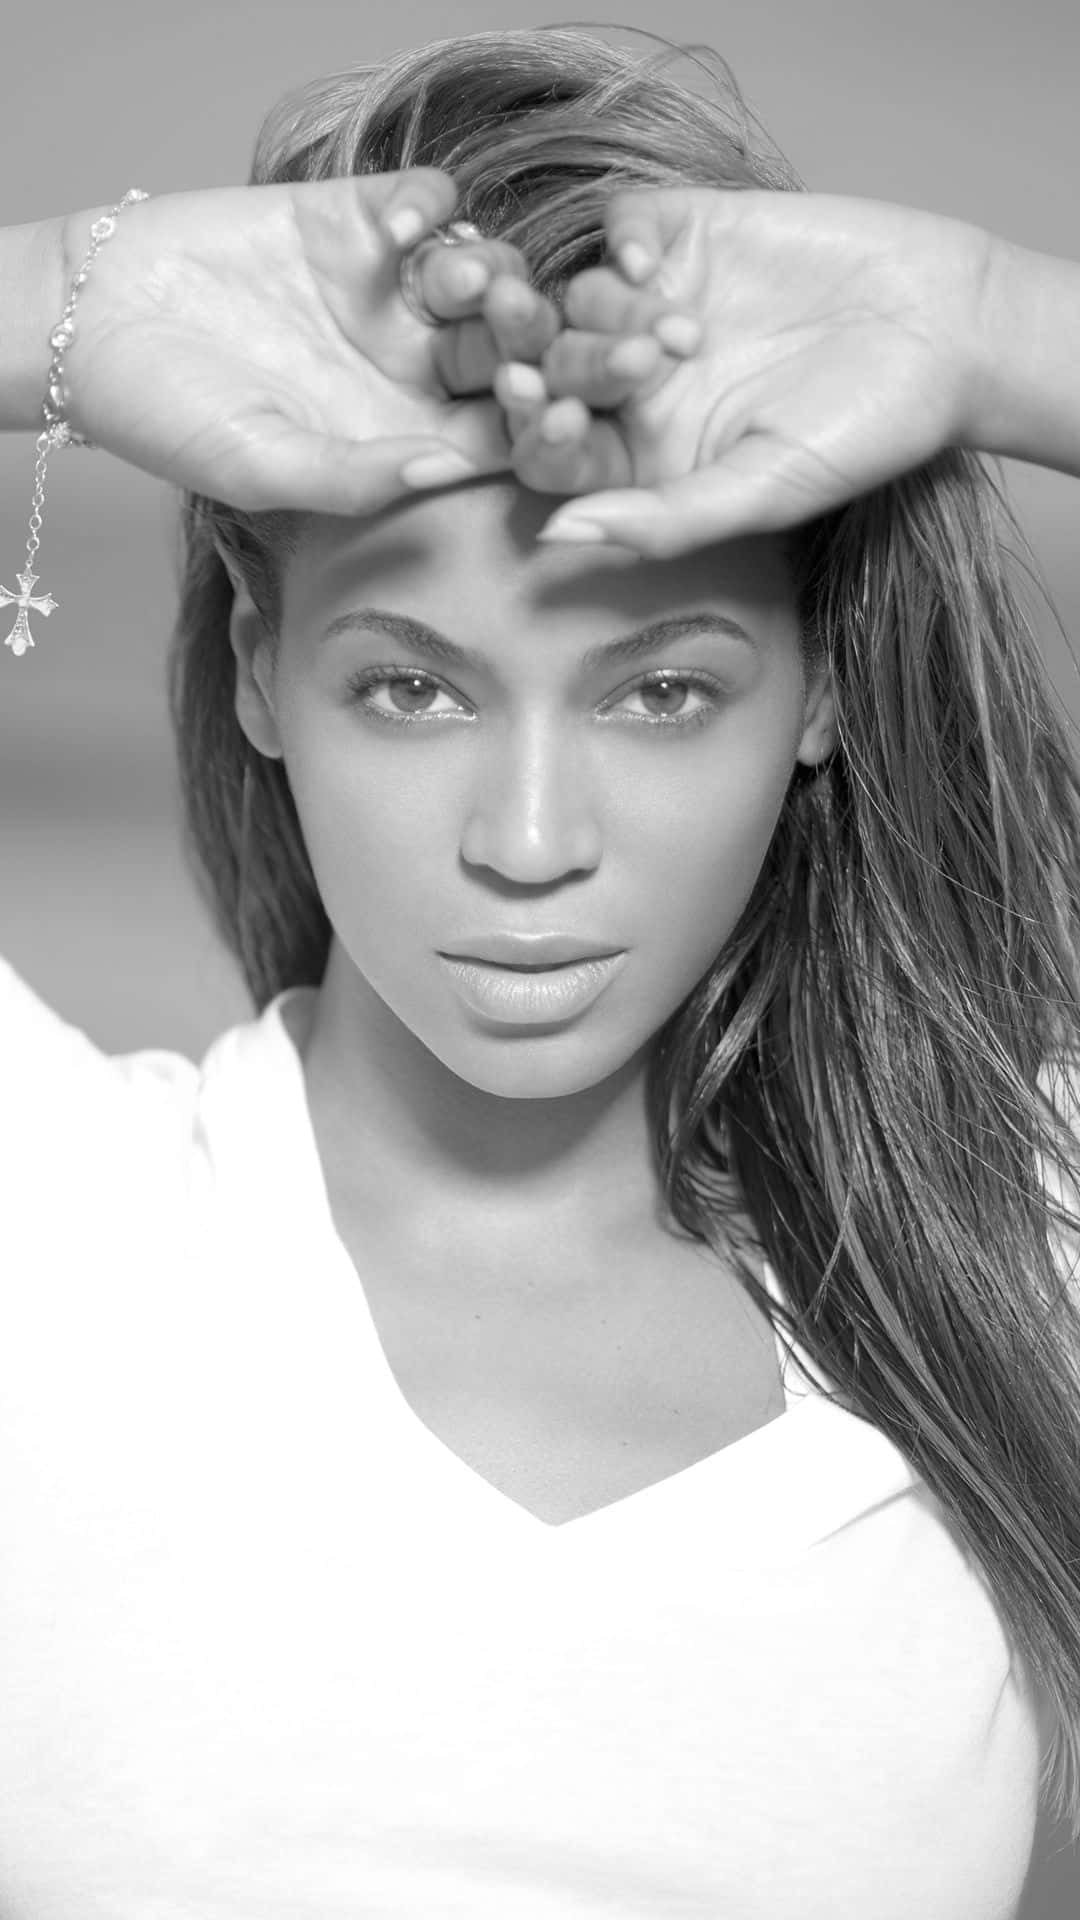 Queen Beyonce striking a fierce pose